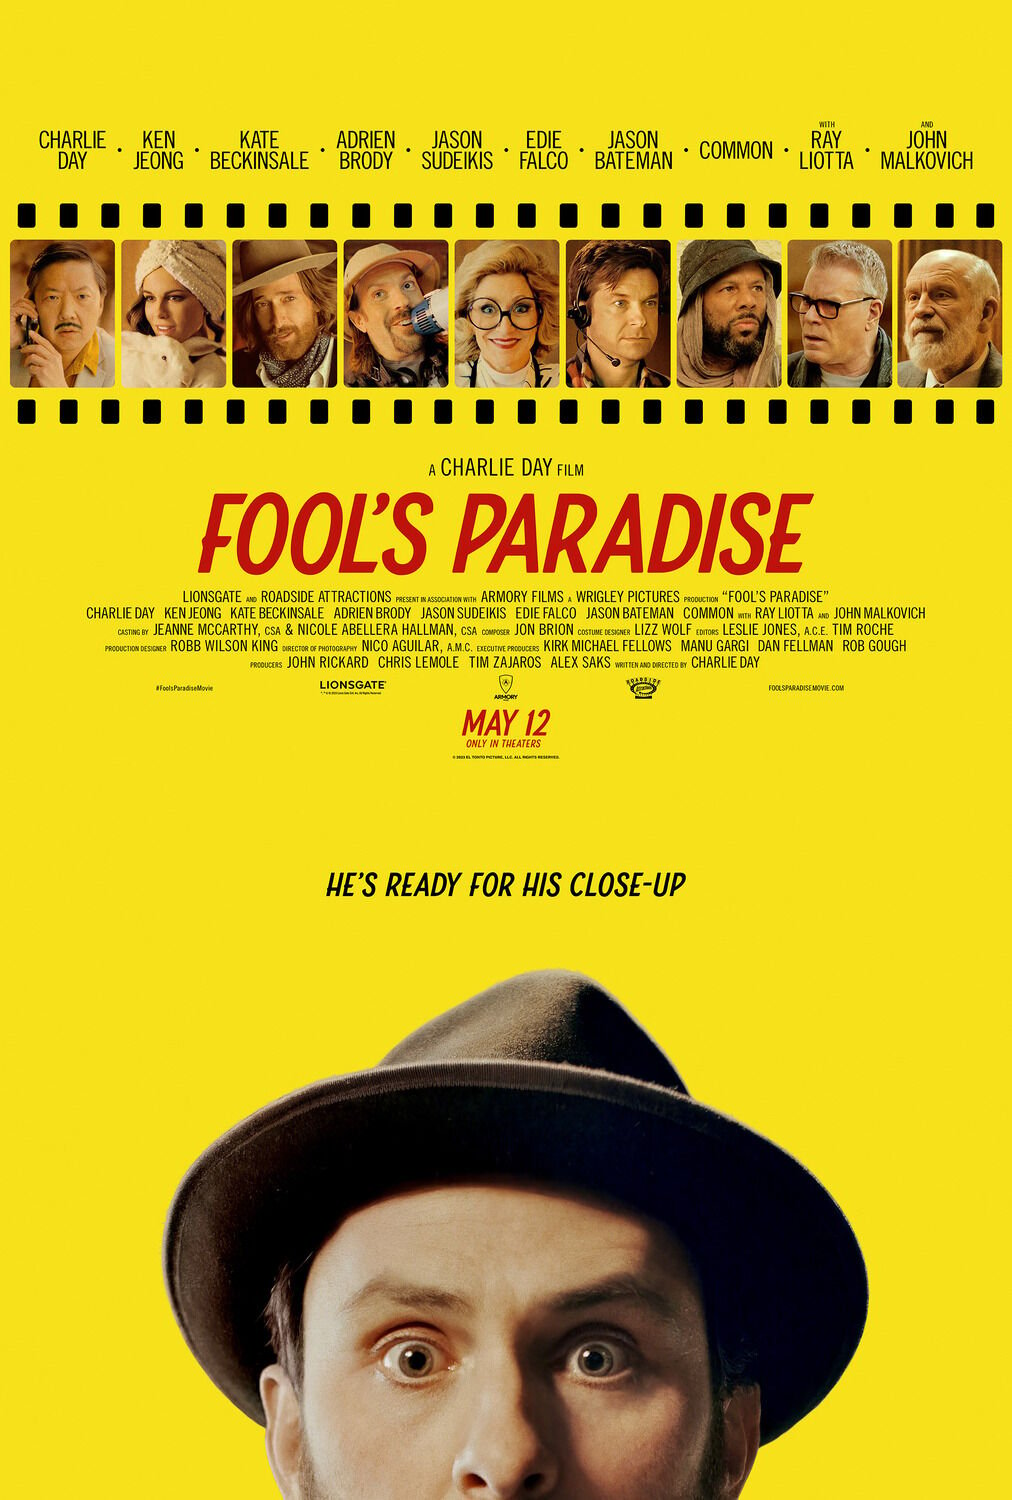 Charlie Day Skips 'Fool's Paradise' Premiere Press Amid WGA Strike